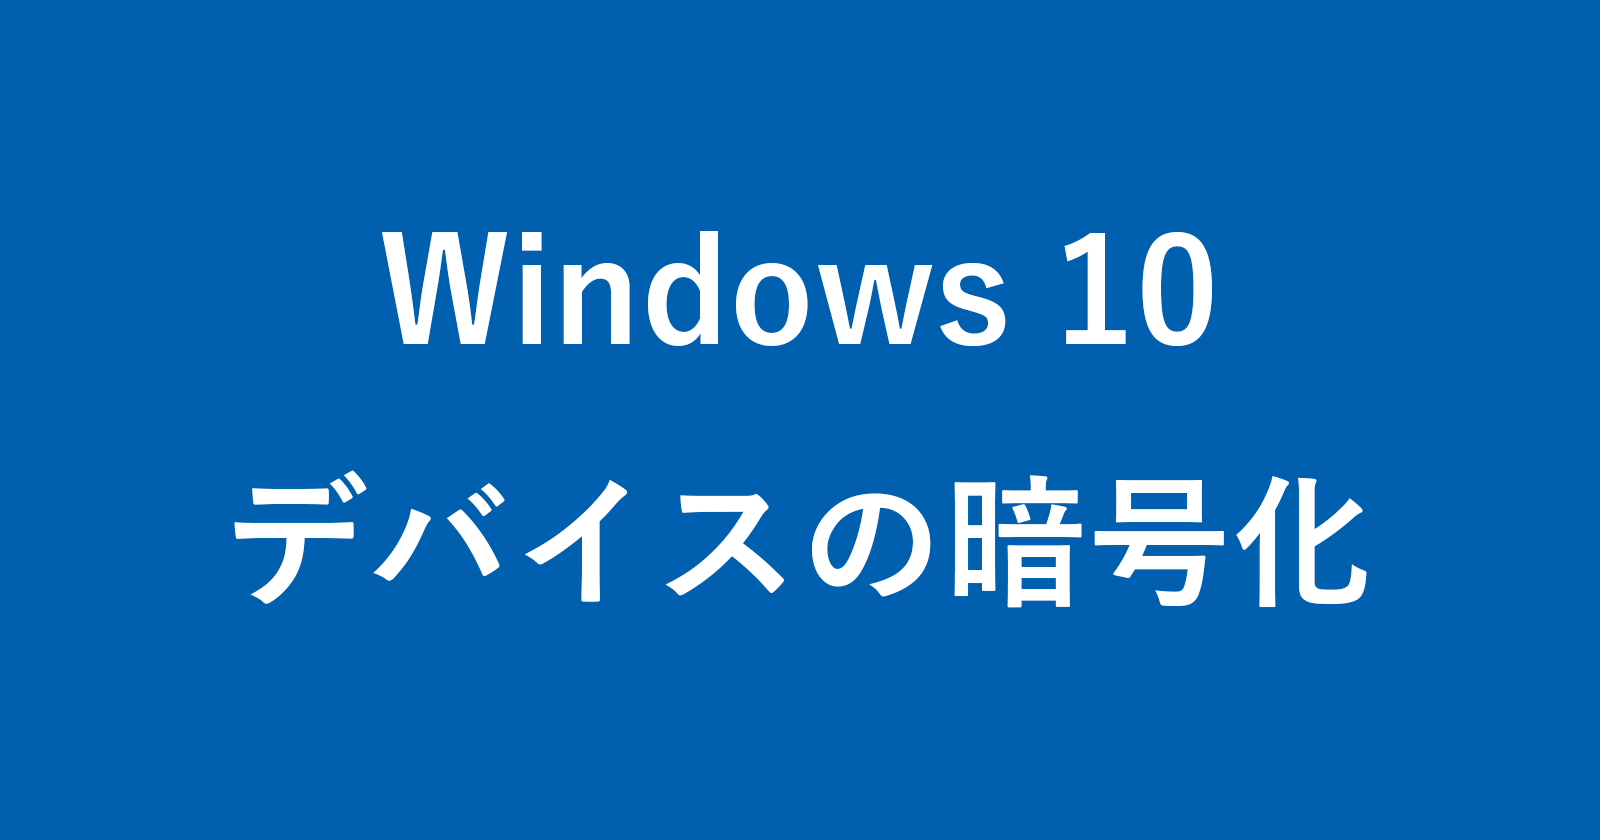 windows 10 device encryption